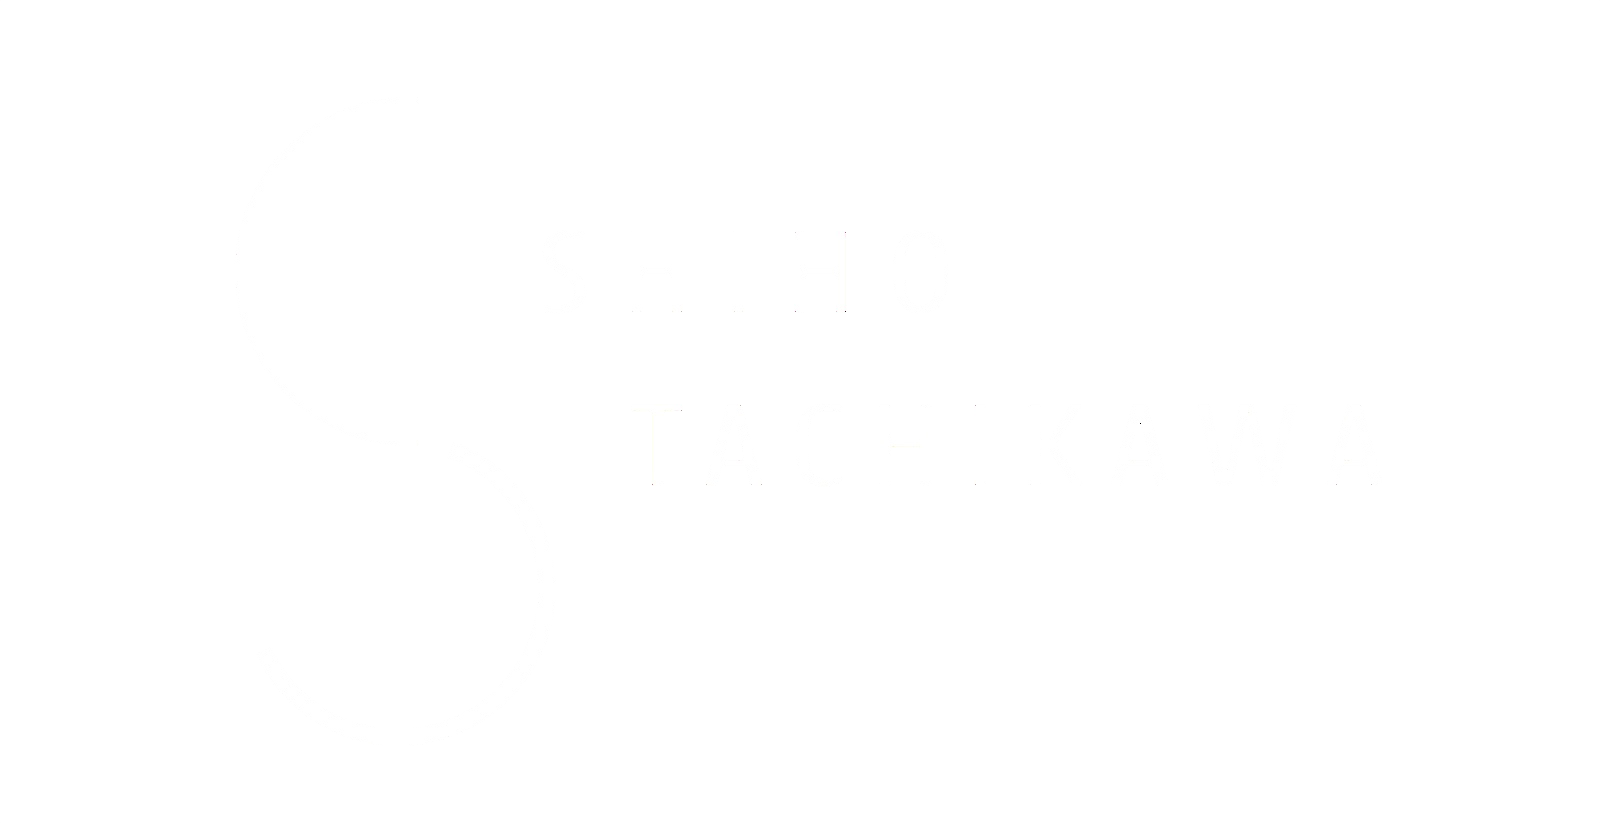 SHIHO TACHIKAWA